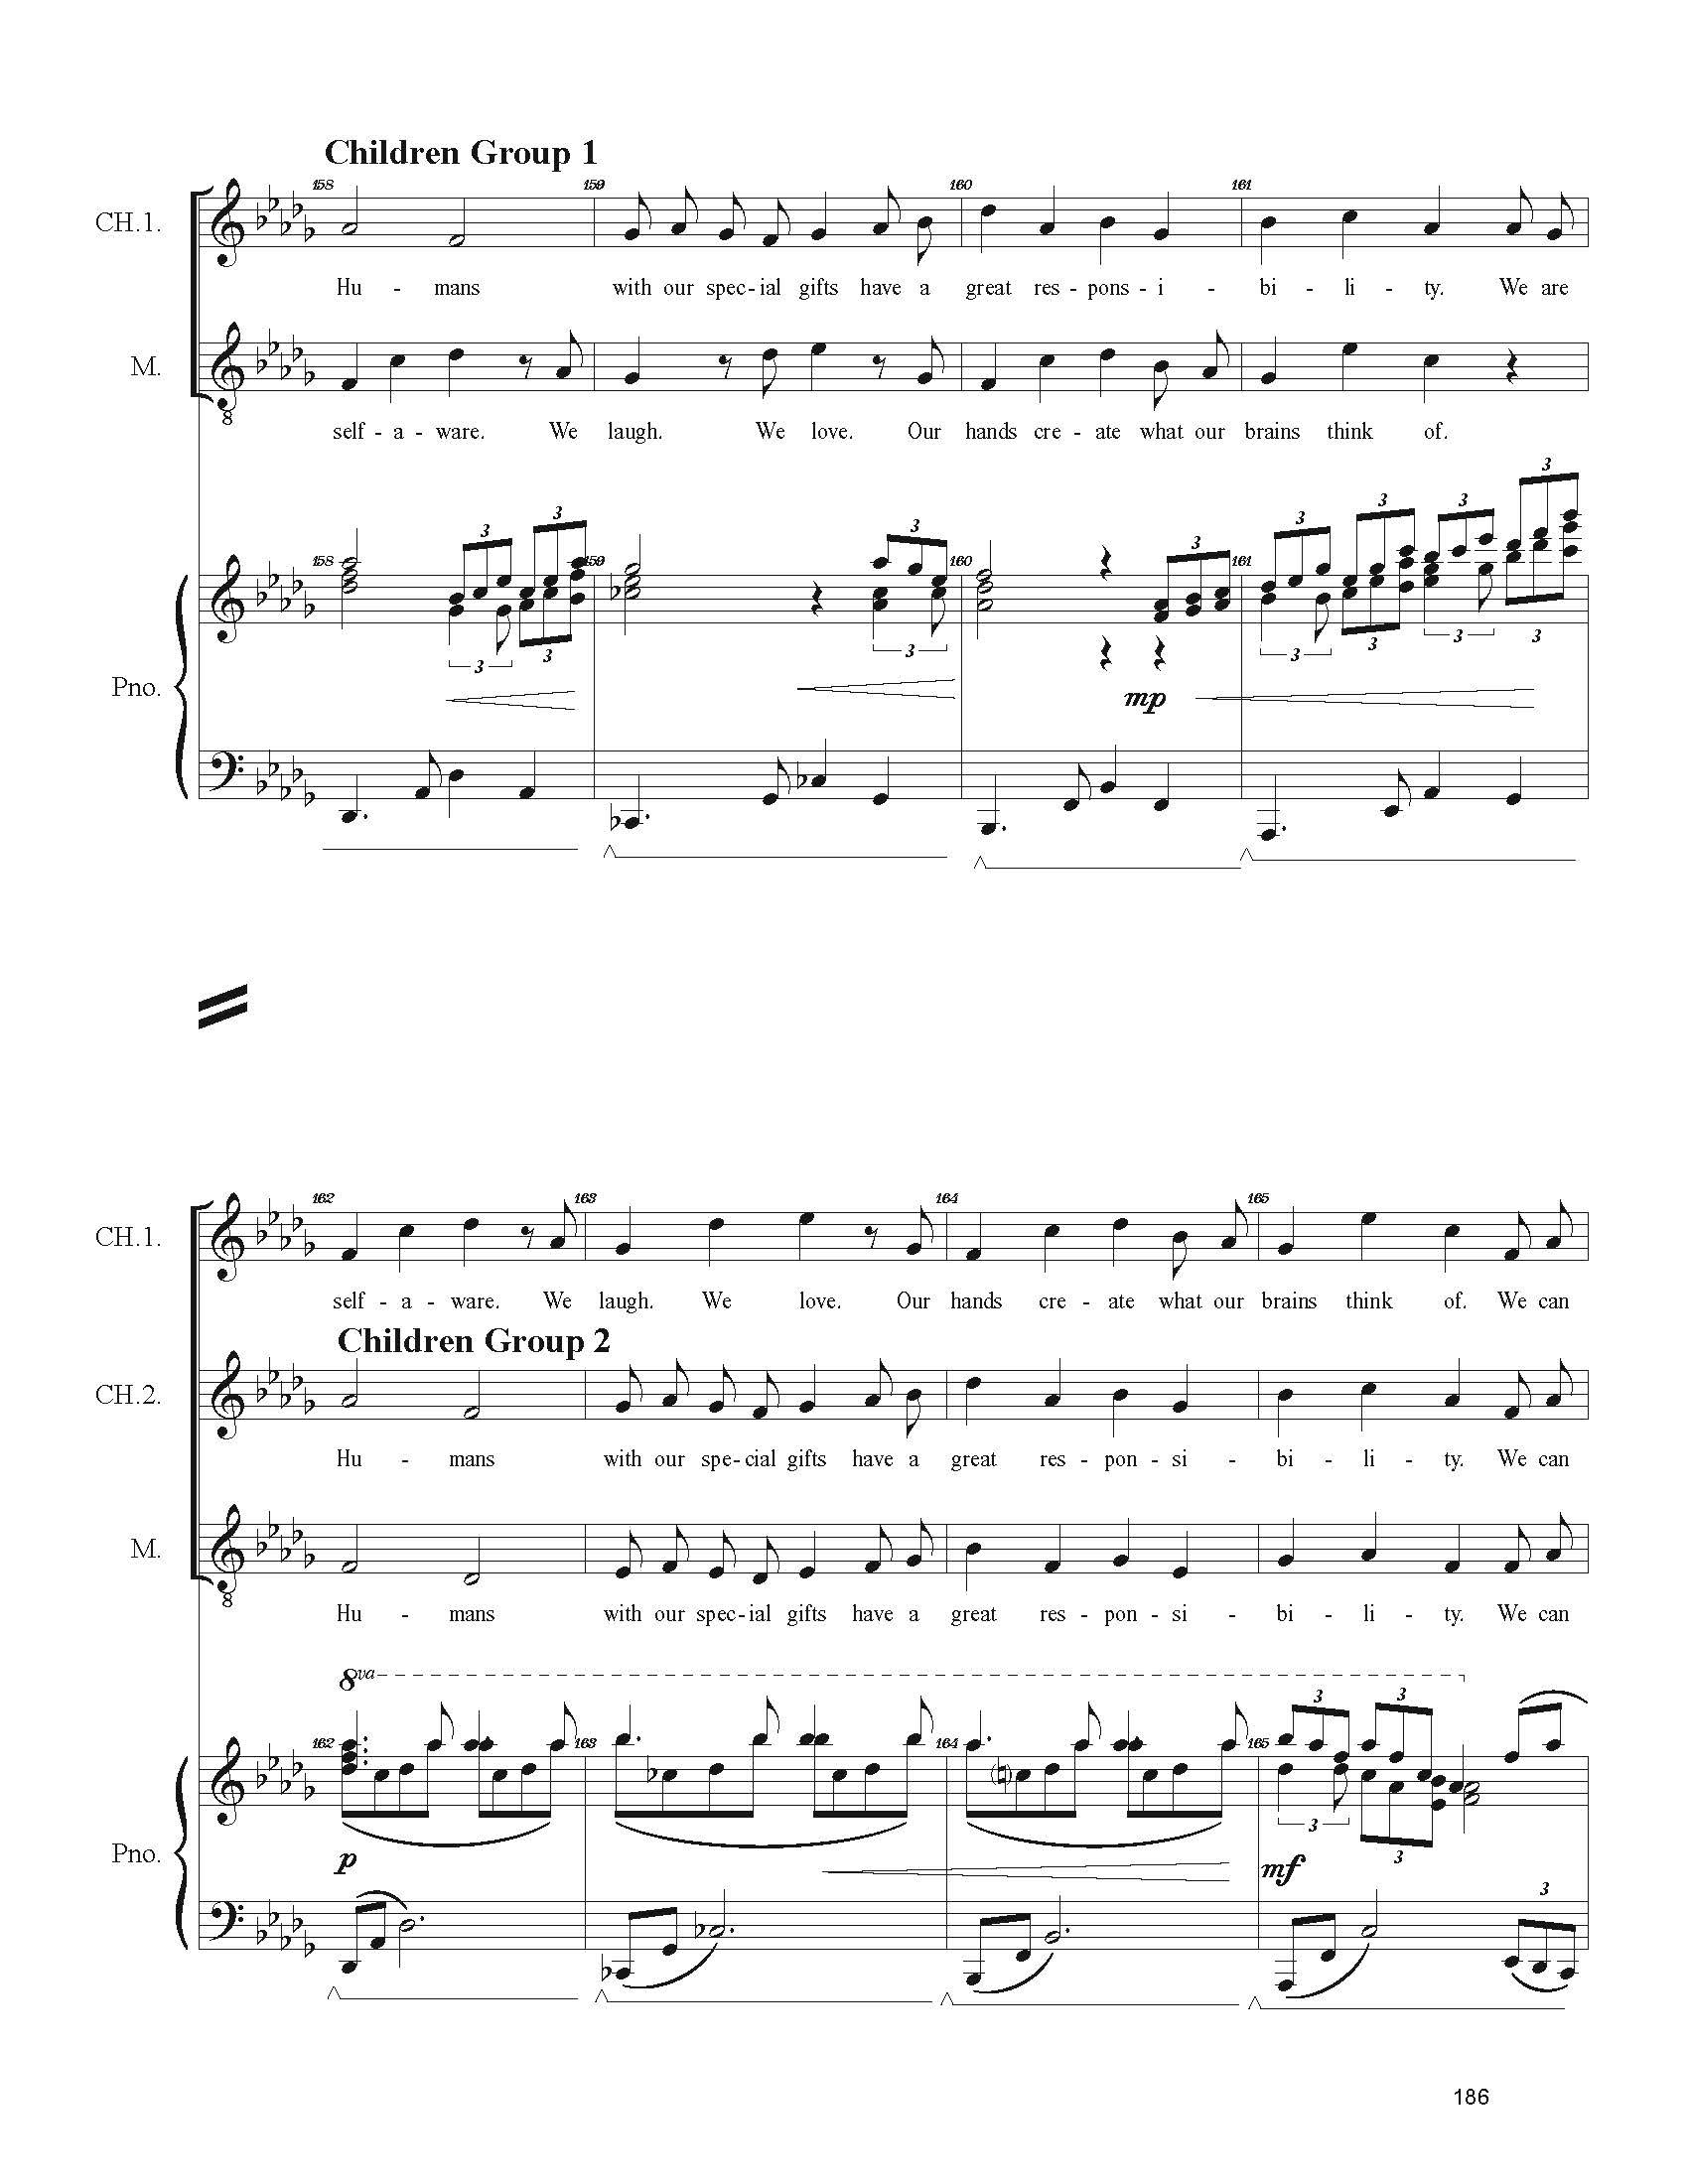 FULL PIANO VOCAL SCORE DRAFT 1 - Score_Page_186.jpg